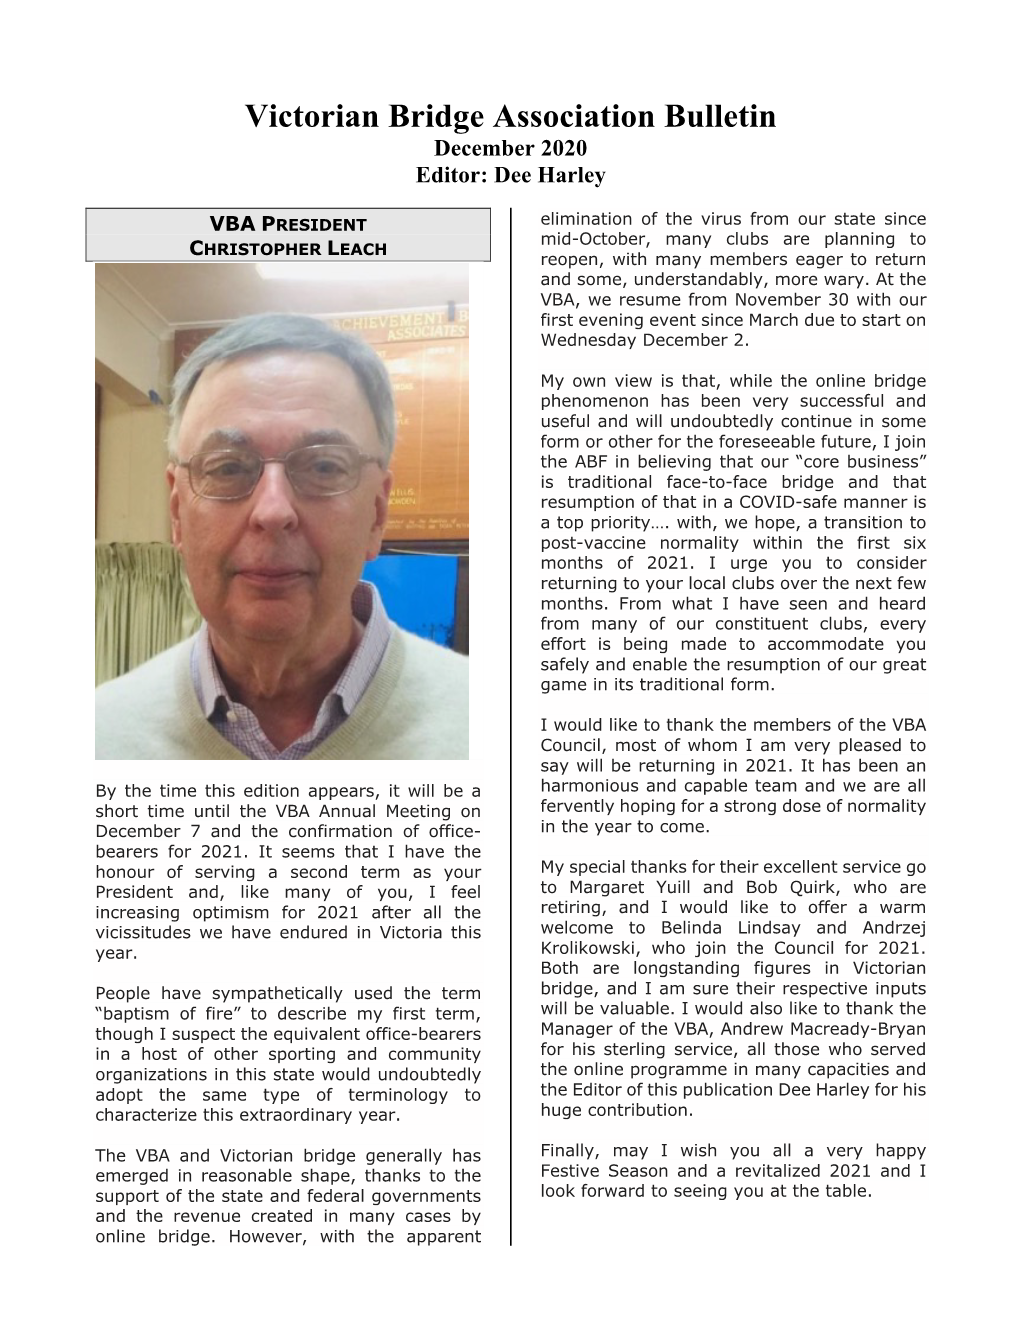 Victorian Bridge Association Bulletin December 2020 Editor: Dee Harley